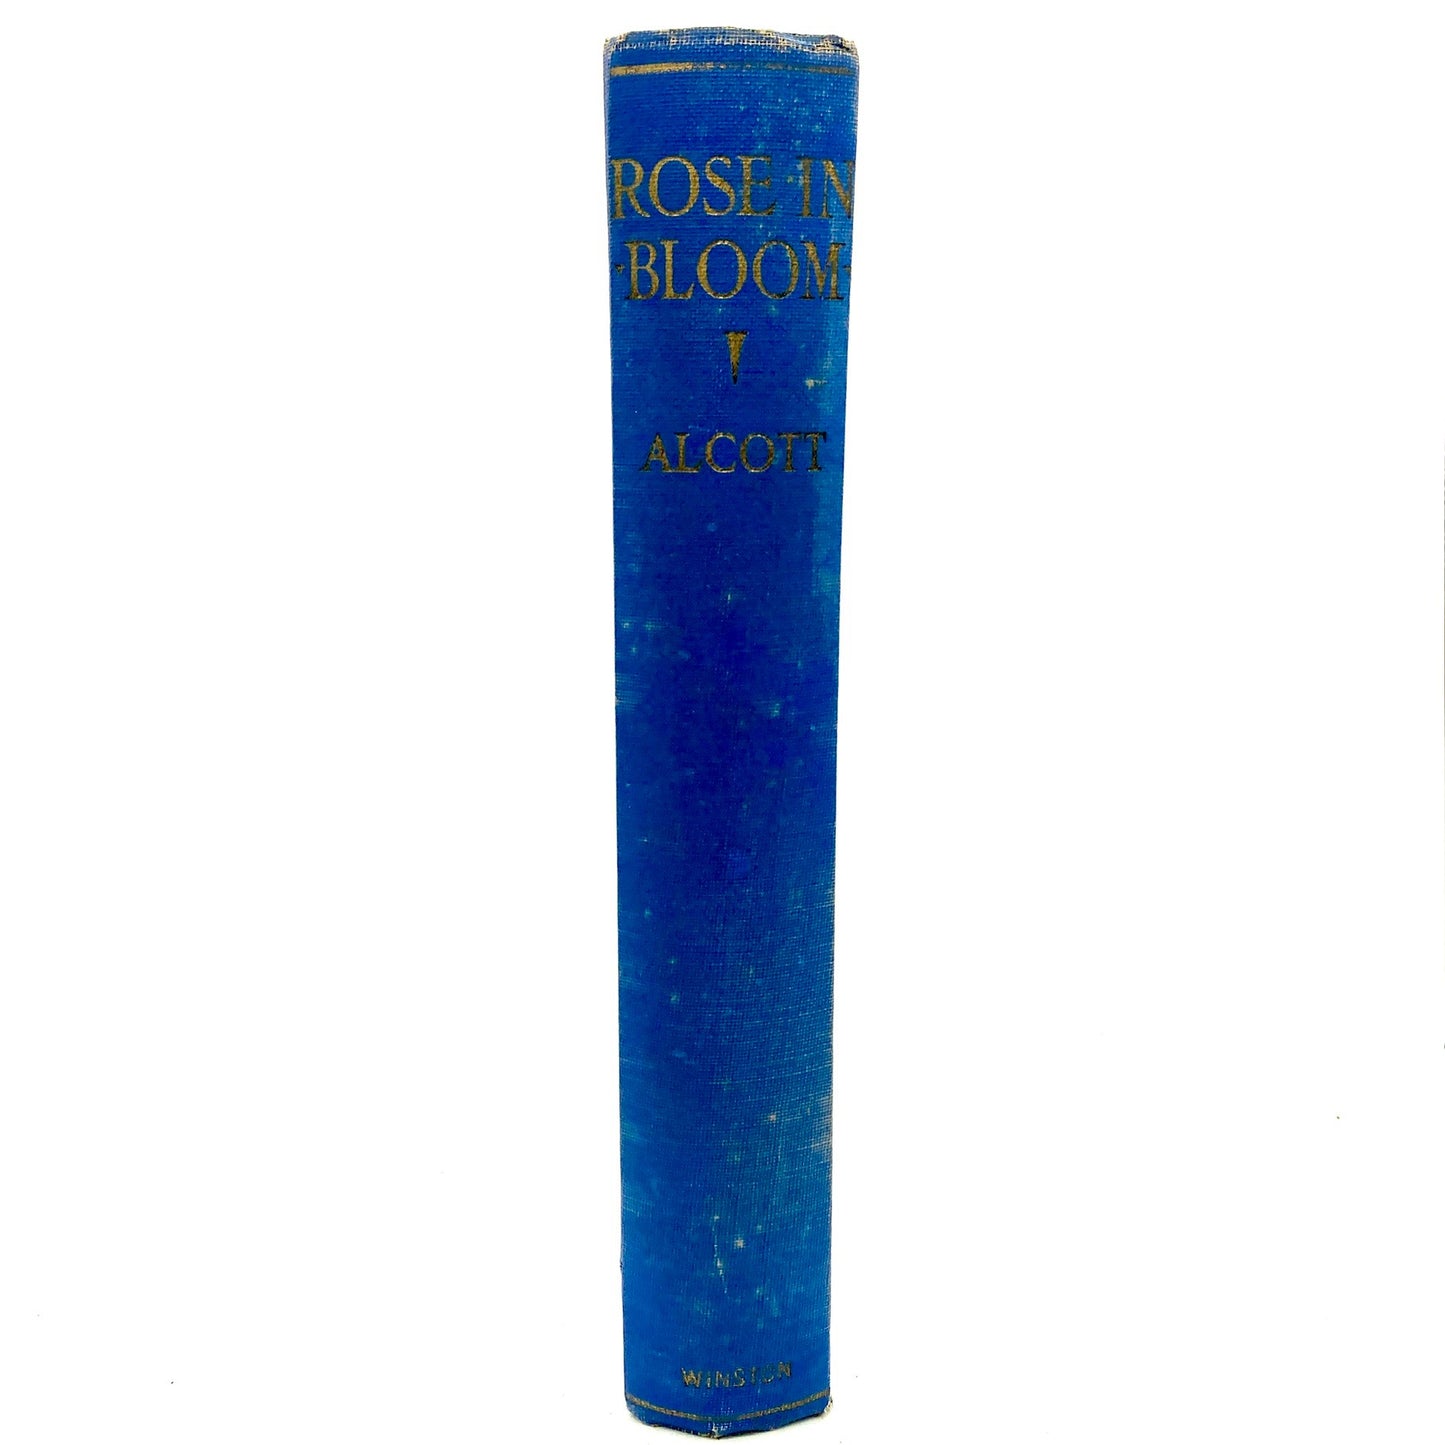 ALCOTT, Louisa May "Rose in Bloom" [John C. Winston, 1933]